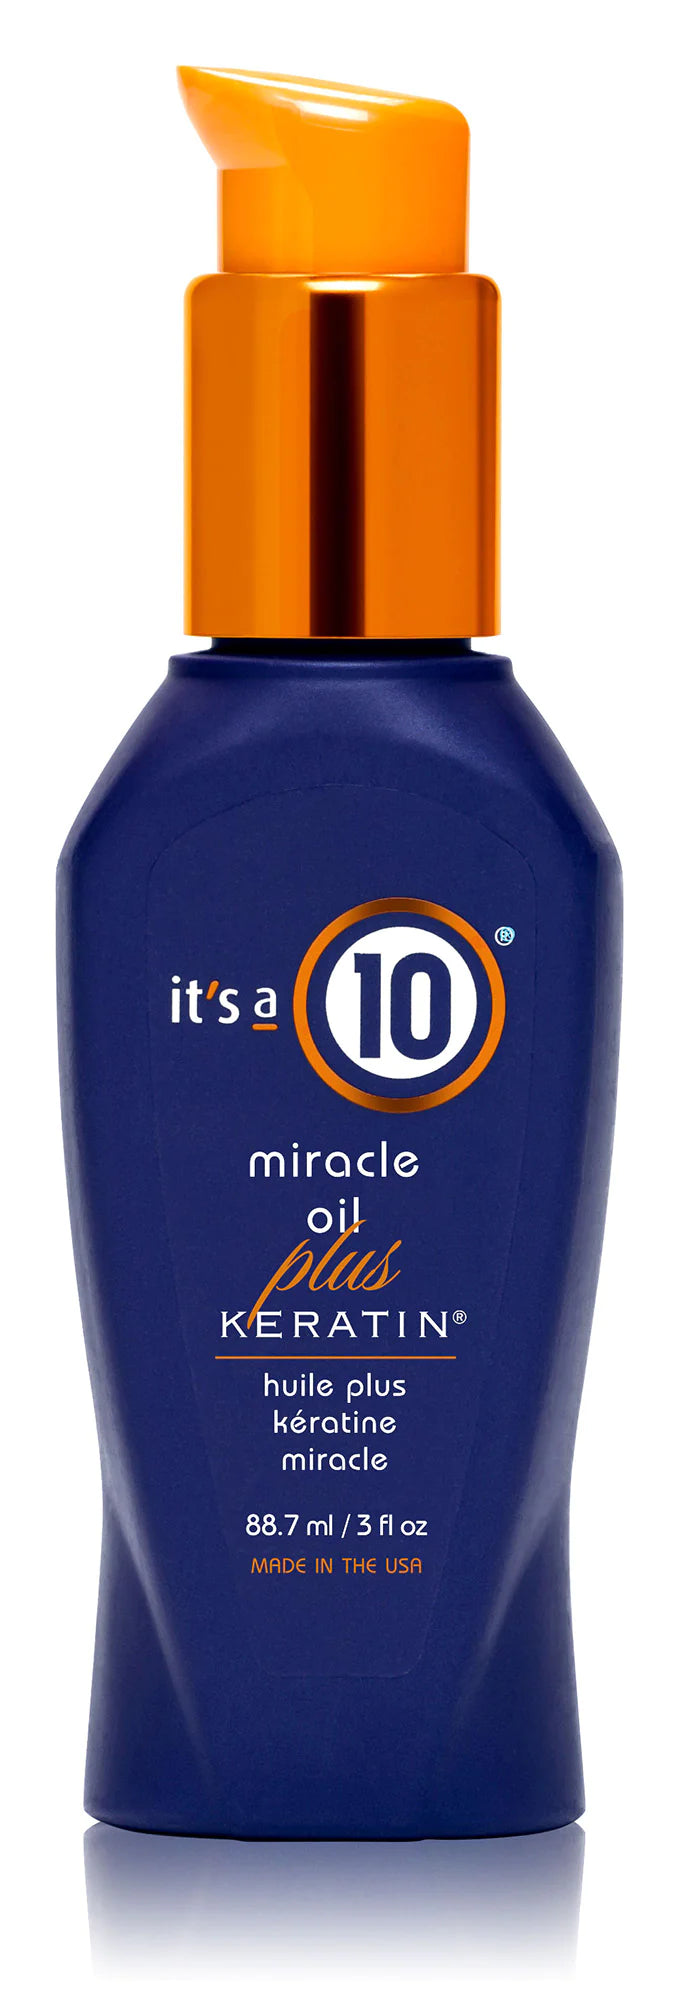 It's a 10 Miracle Oil Plus Keratin 3 oz bottle image